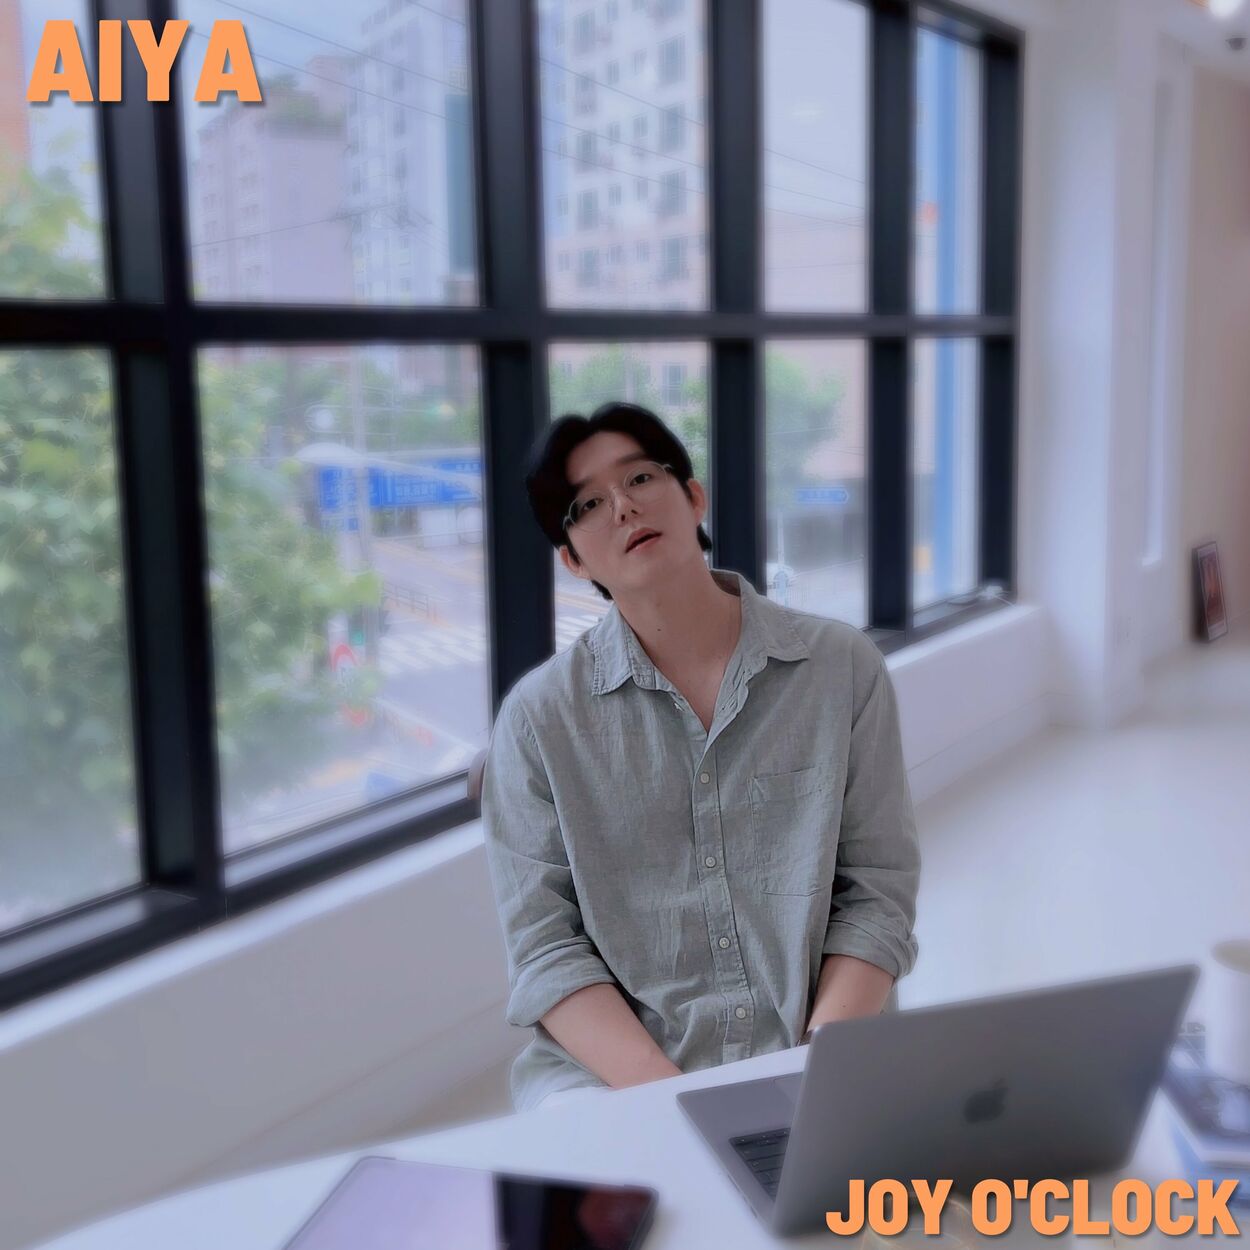 Joy O’clock – Aiya – Single